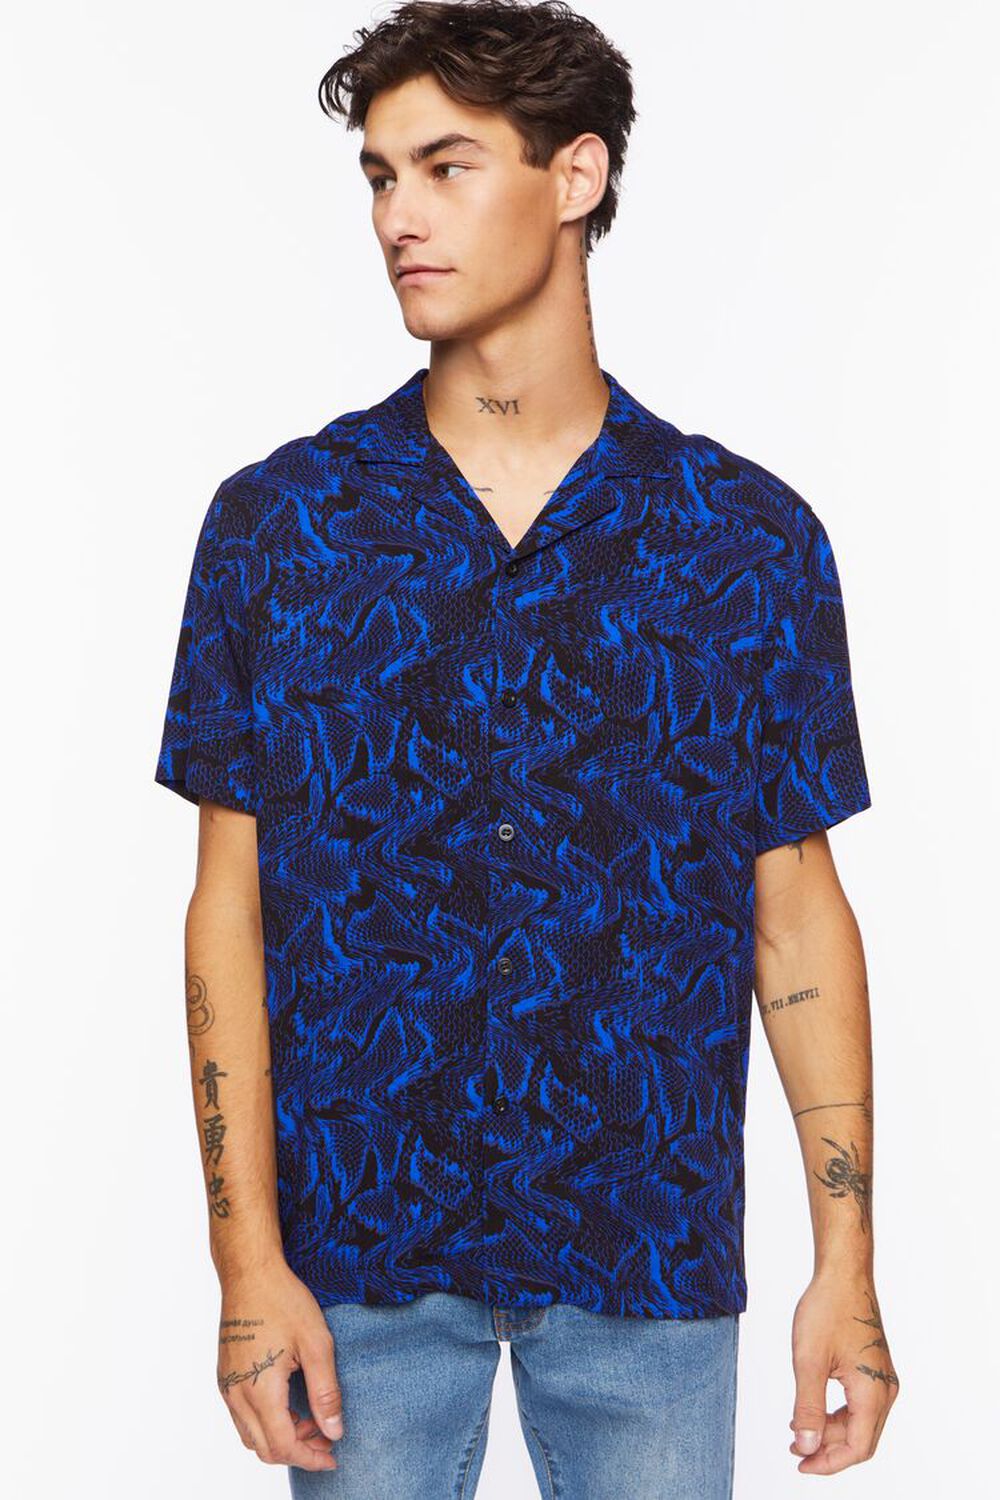 BLACK/BLUE Abstract Snakeskin Shirt, image 1